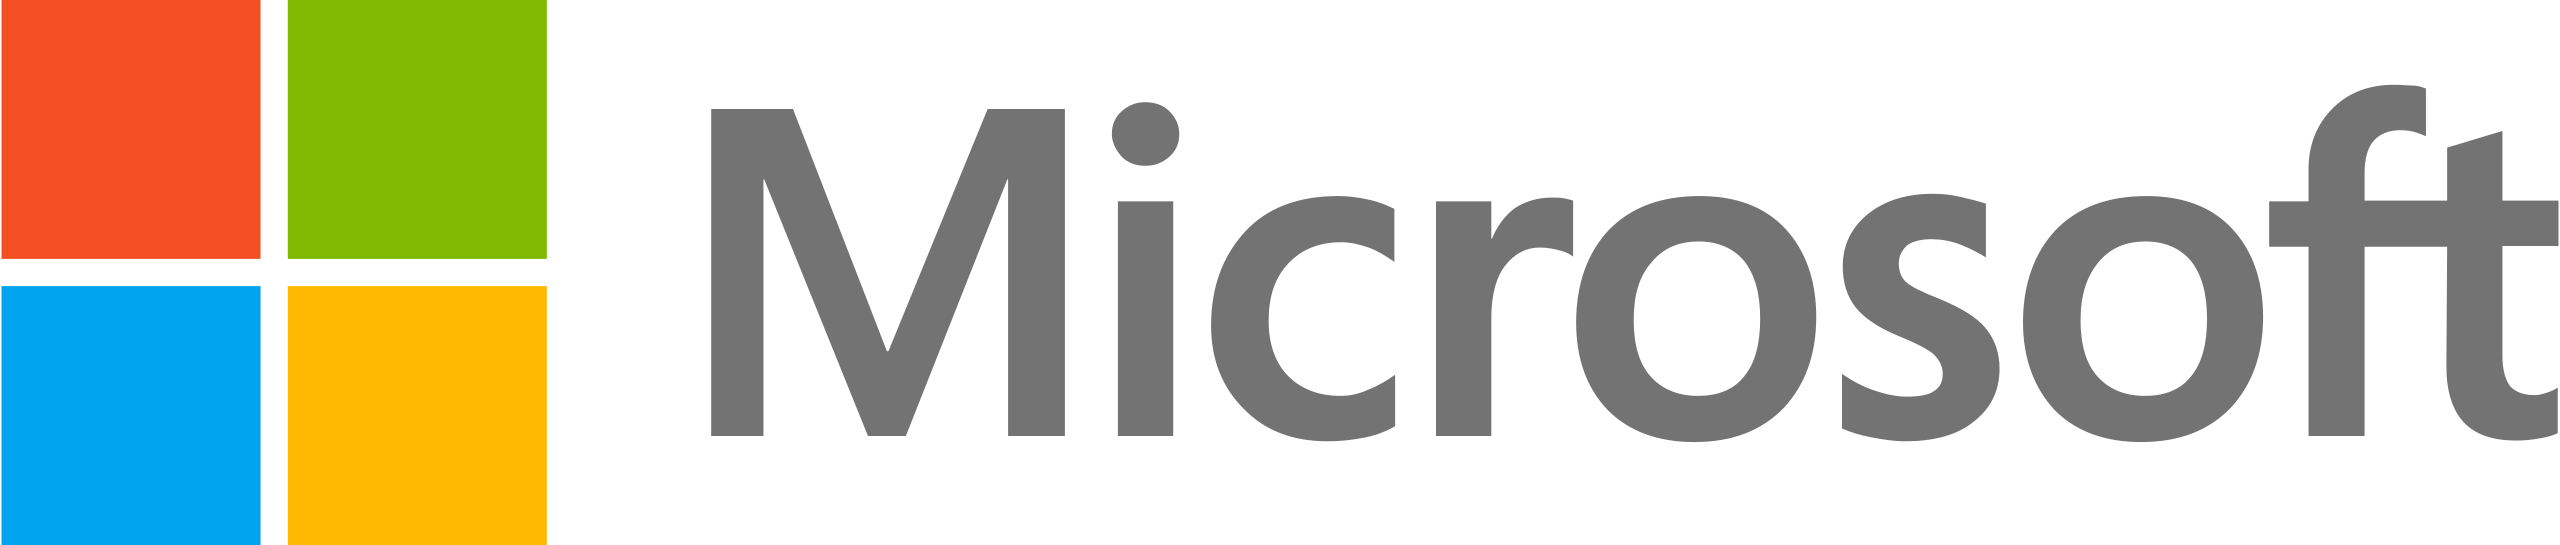 Microsoft Banner Logo